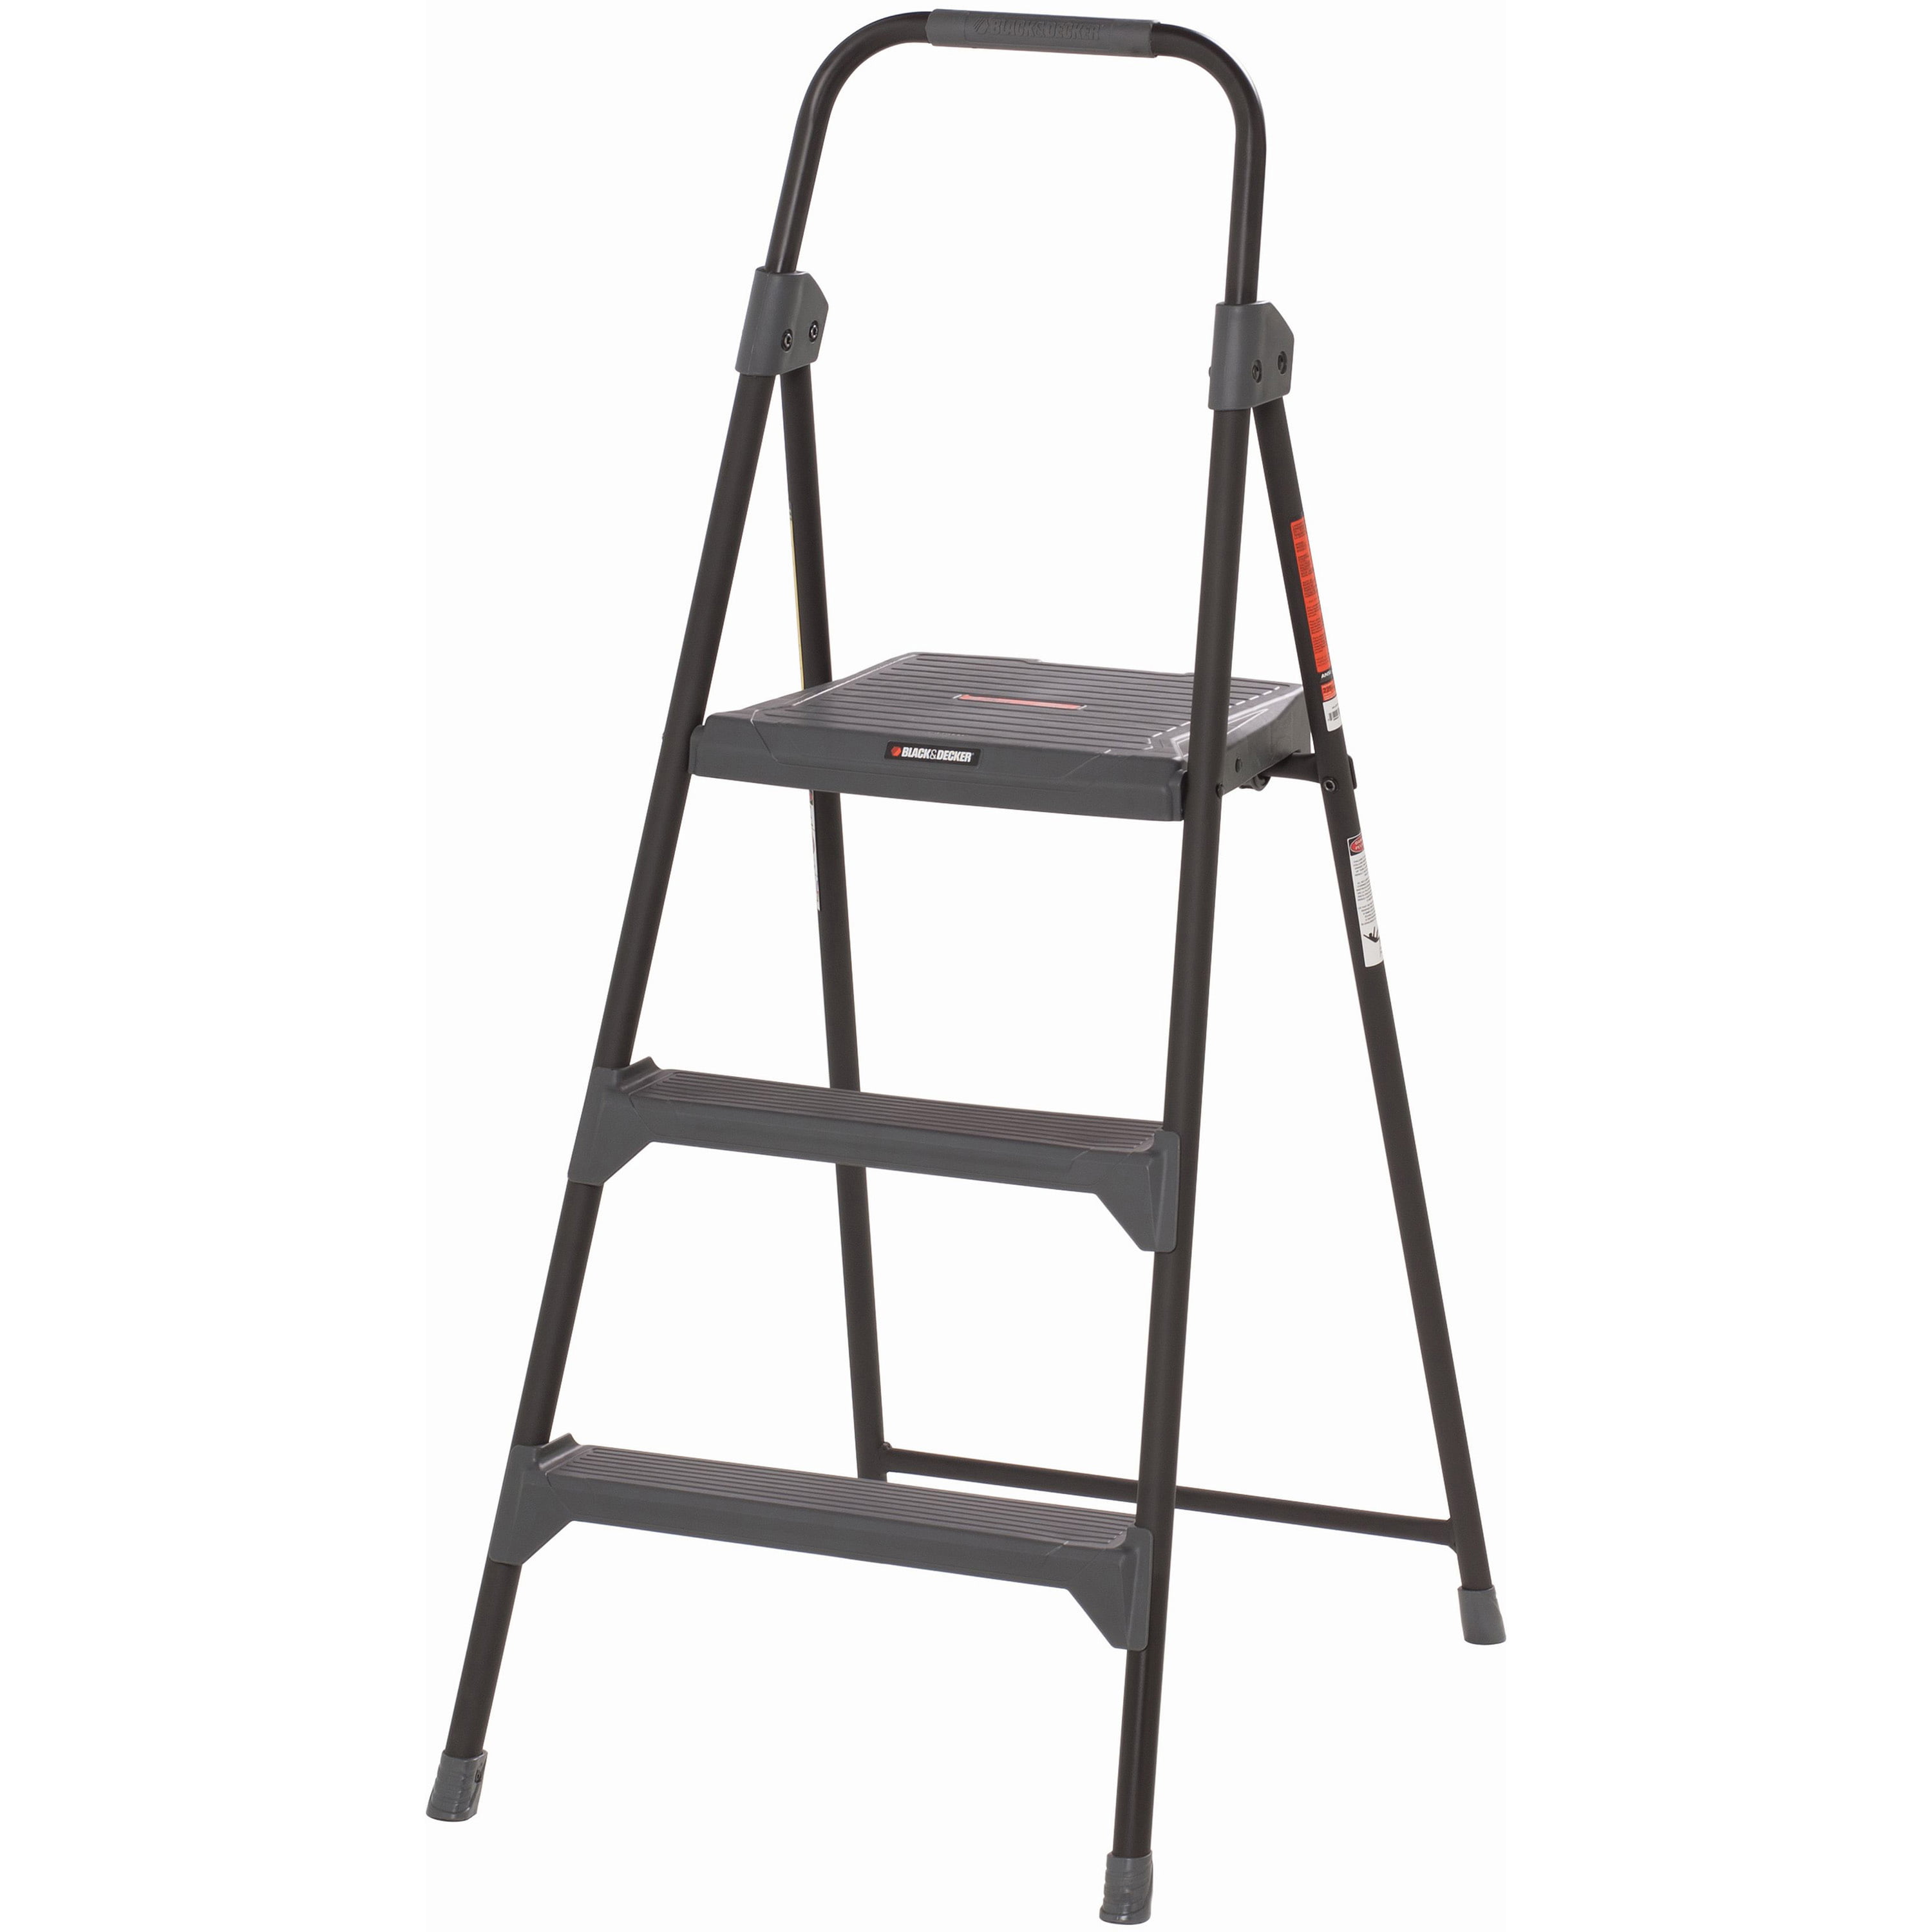 Louisville Davidson Ladders 3' Steel Type II Step Stool BXL426003 Dadbxl426003 for sale online 